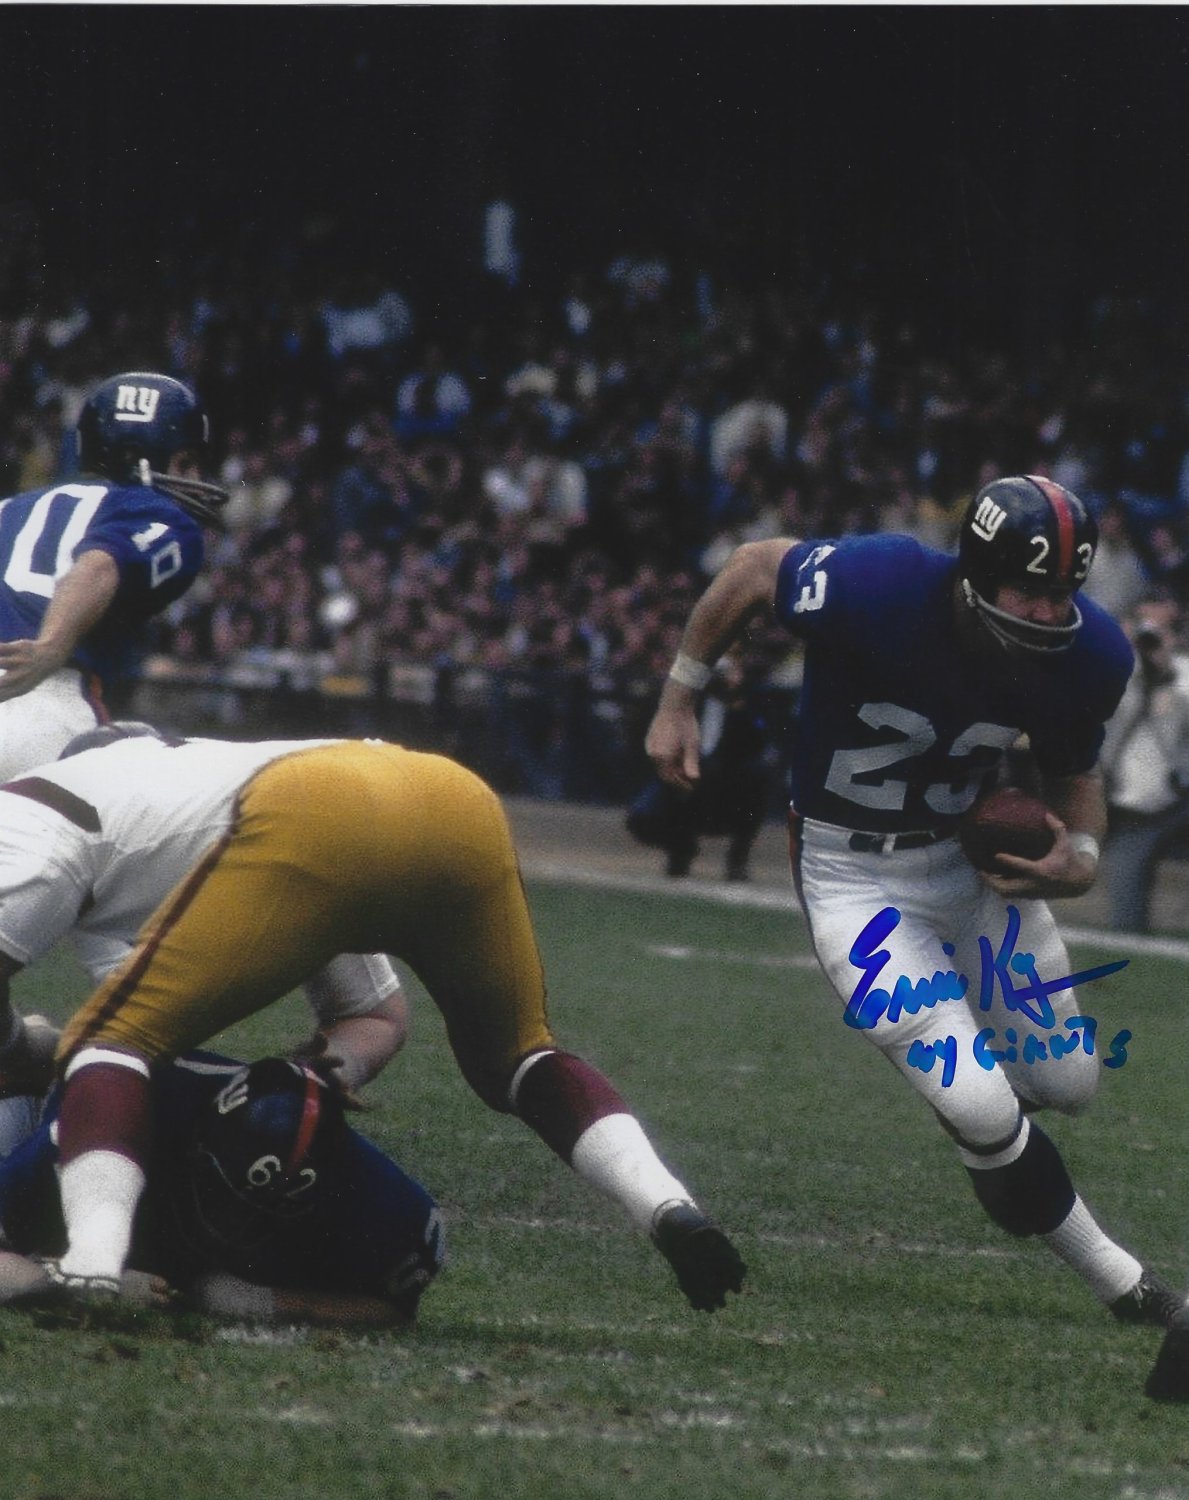 Ernie Koy Signed Autographed 8X10 Photo New York Giants JSA AB54649